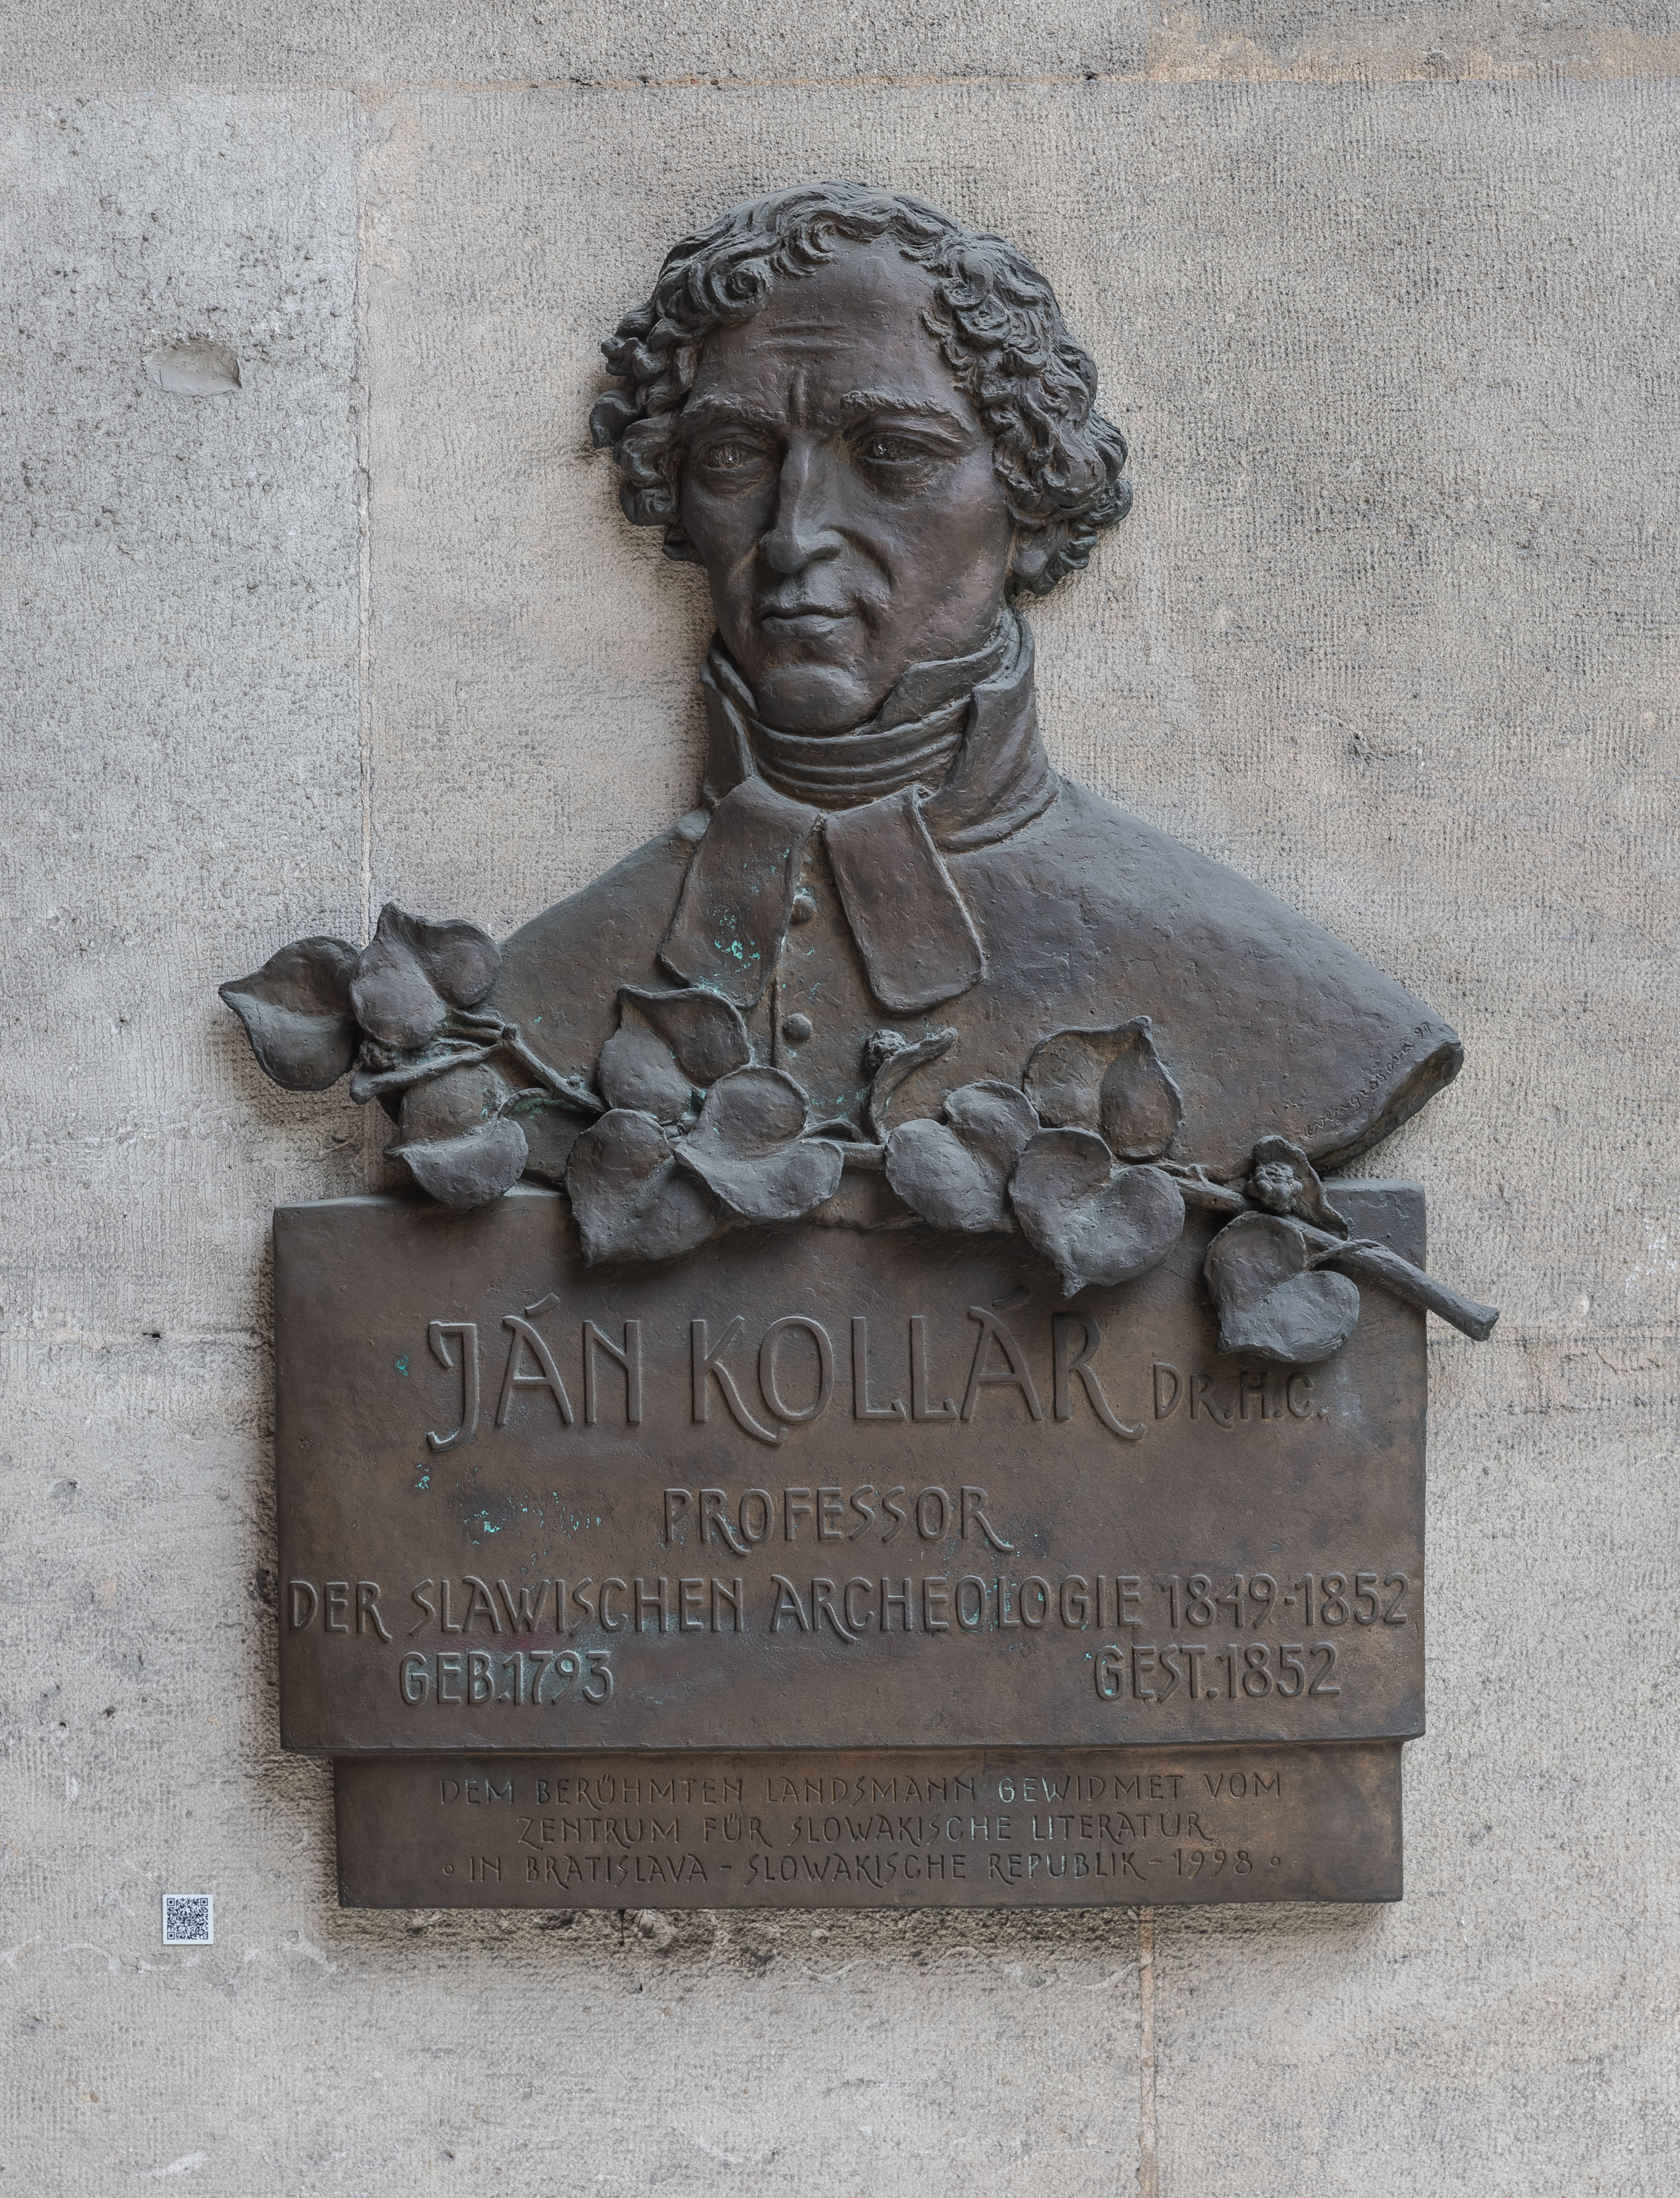 Ján Kollár (1793-1852), archeologist, Nr. 122, basrelief (Bronze) in the Arkadenhof of the University of Vienna-3800-HDR